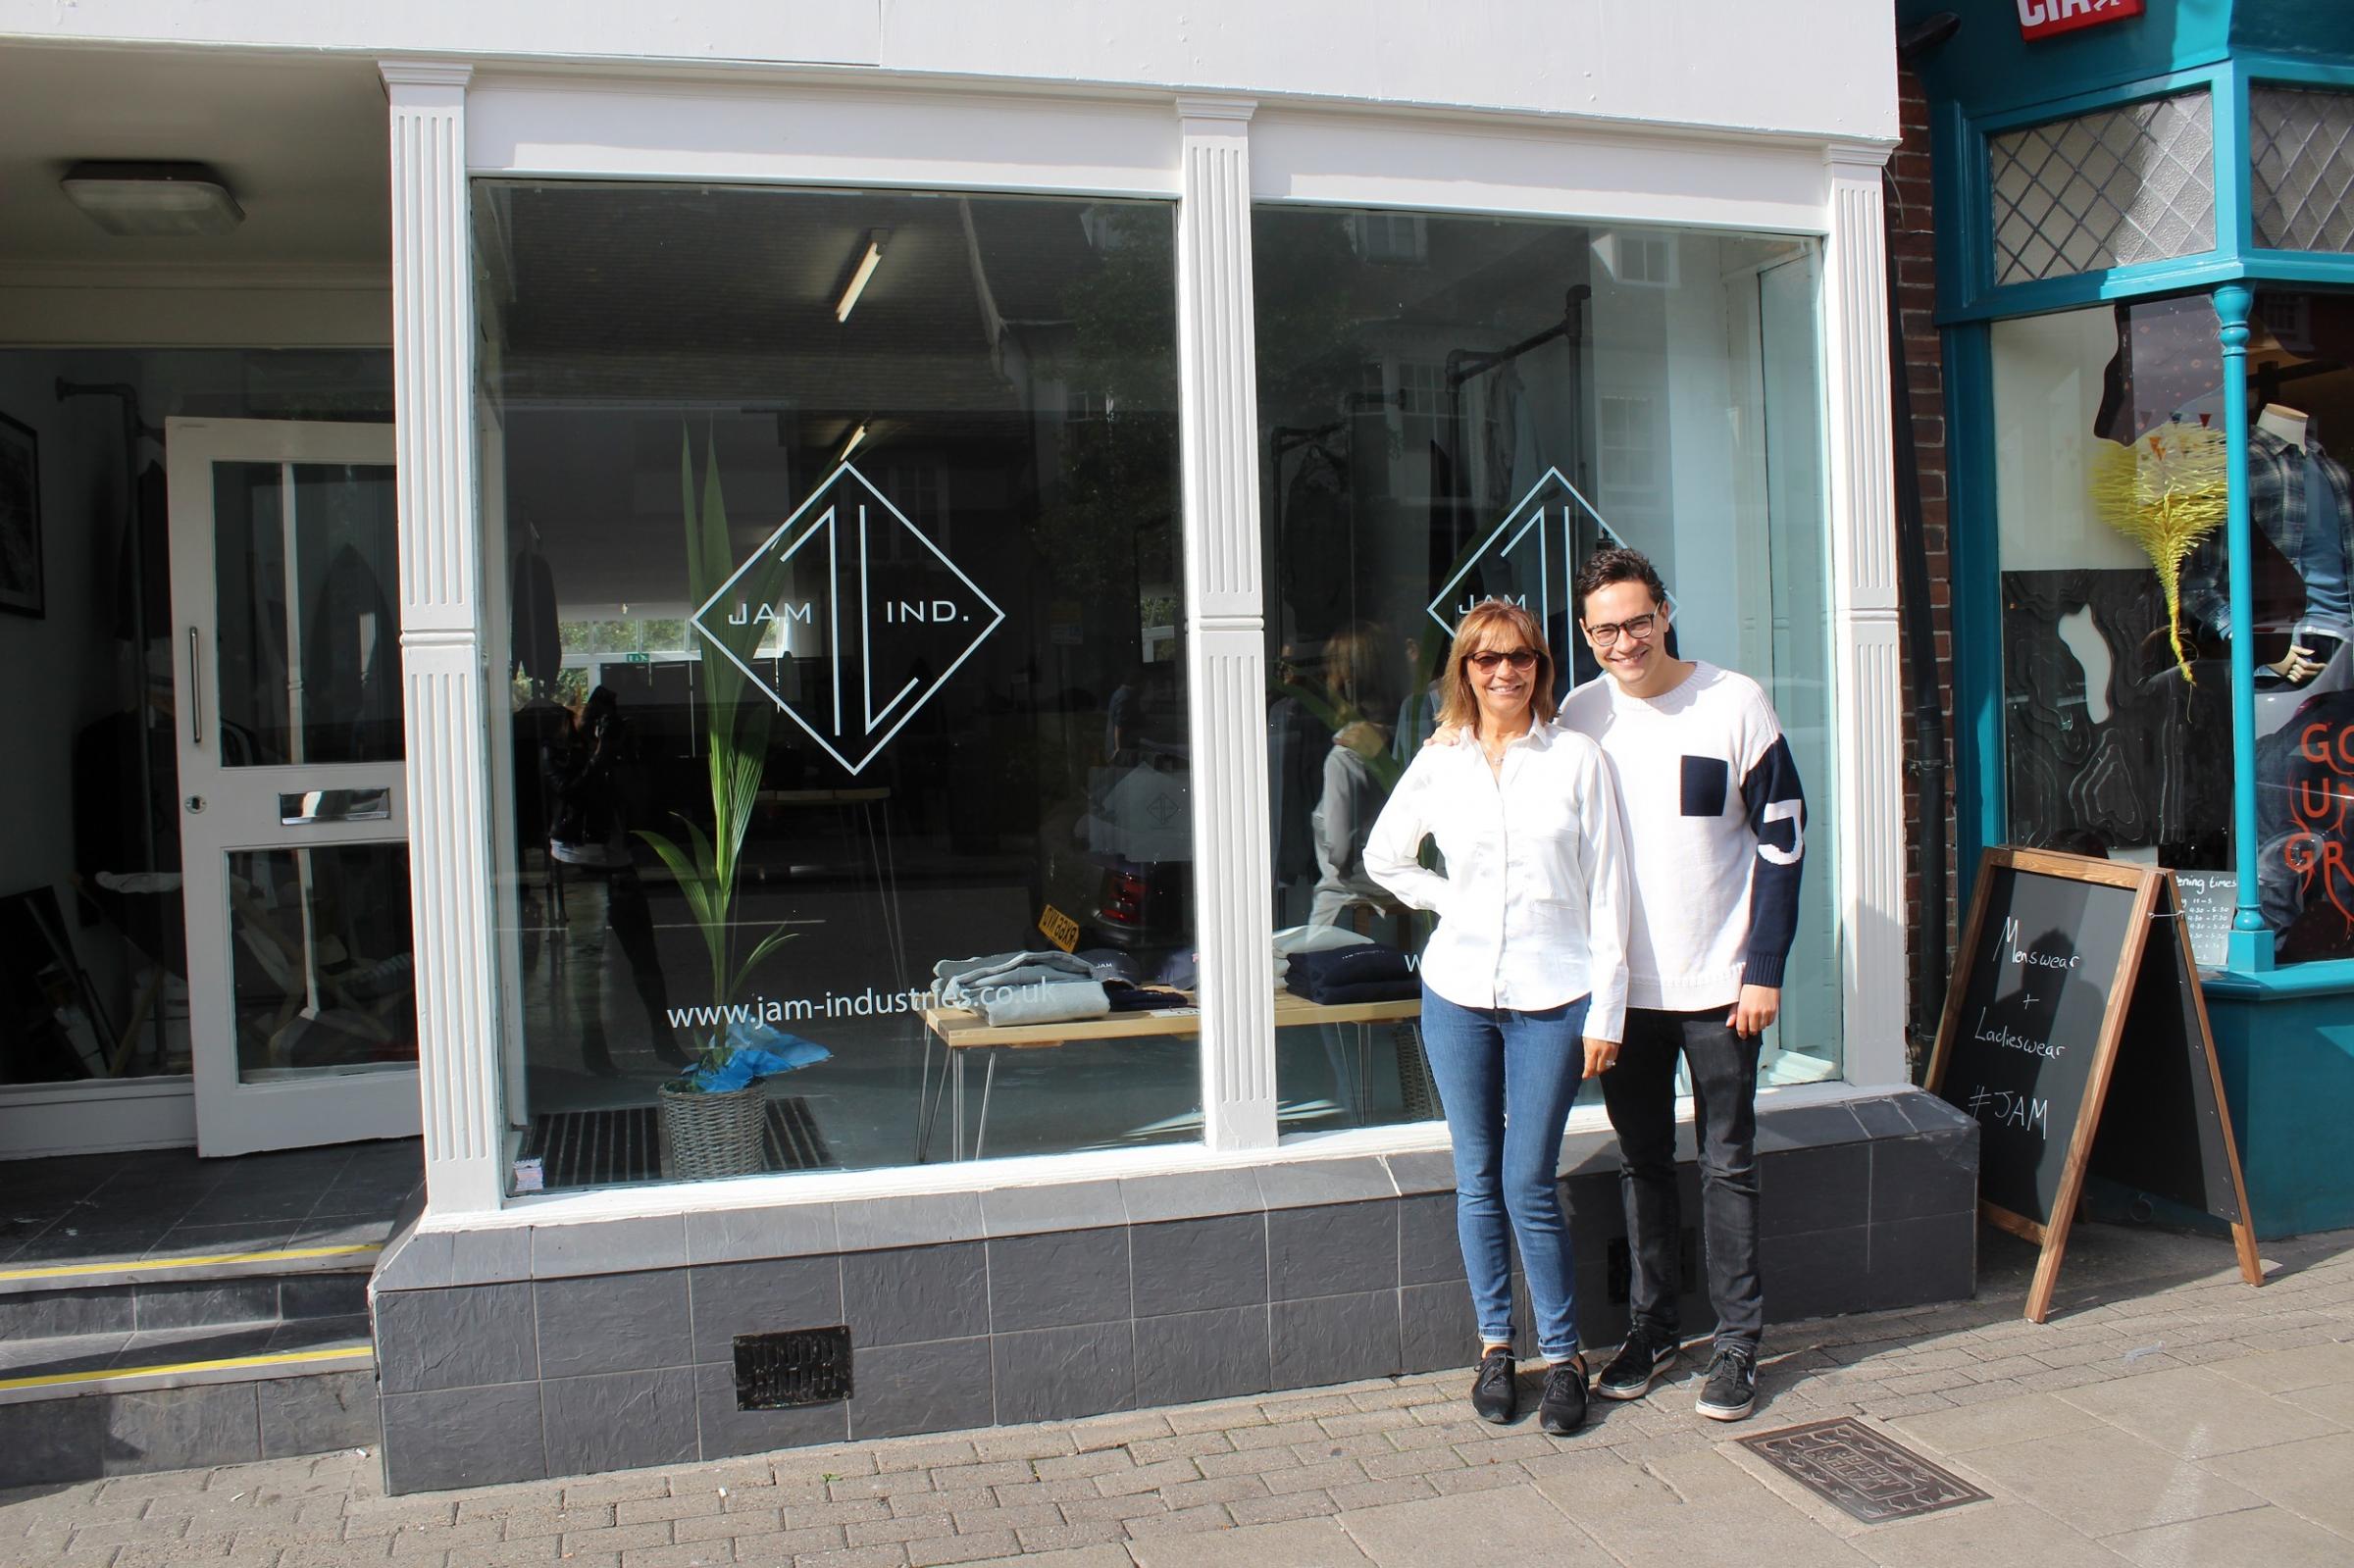 Andy Jordan reopens clothes shop Marlow 